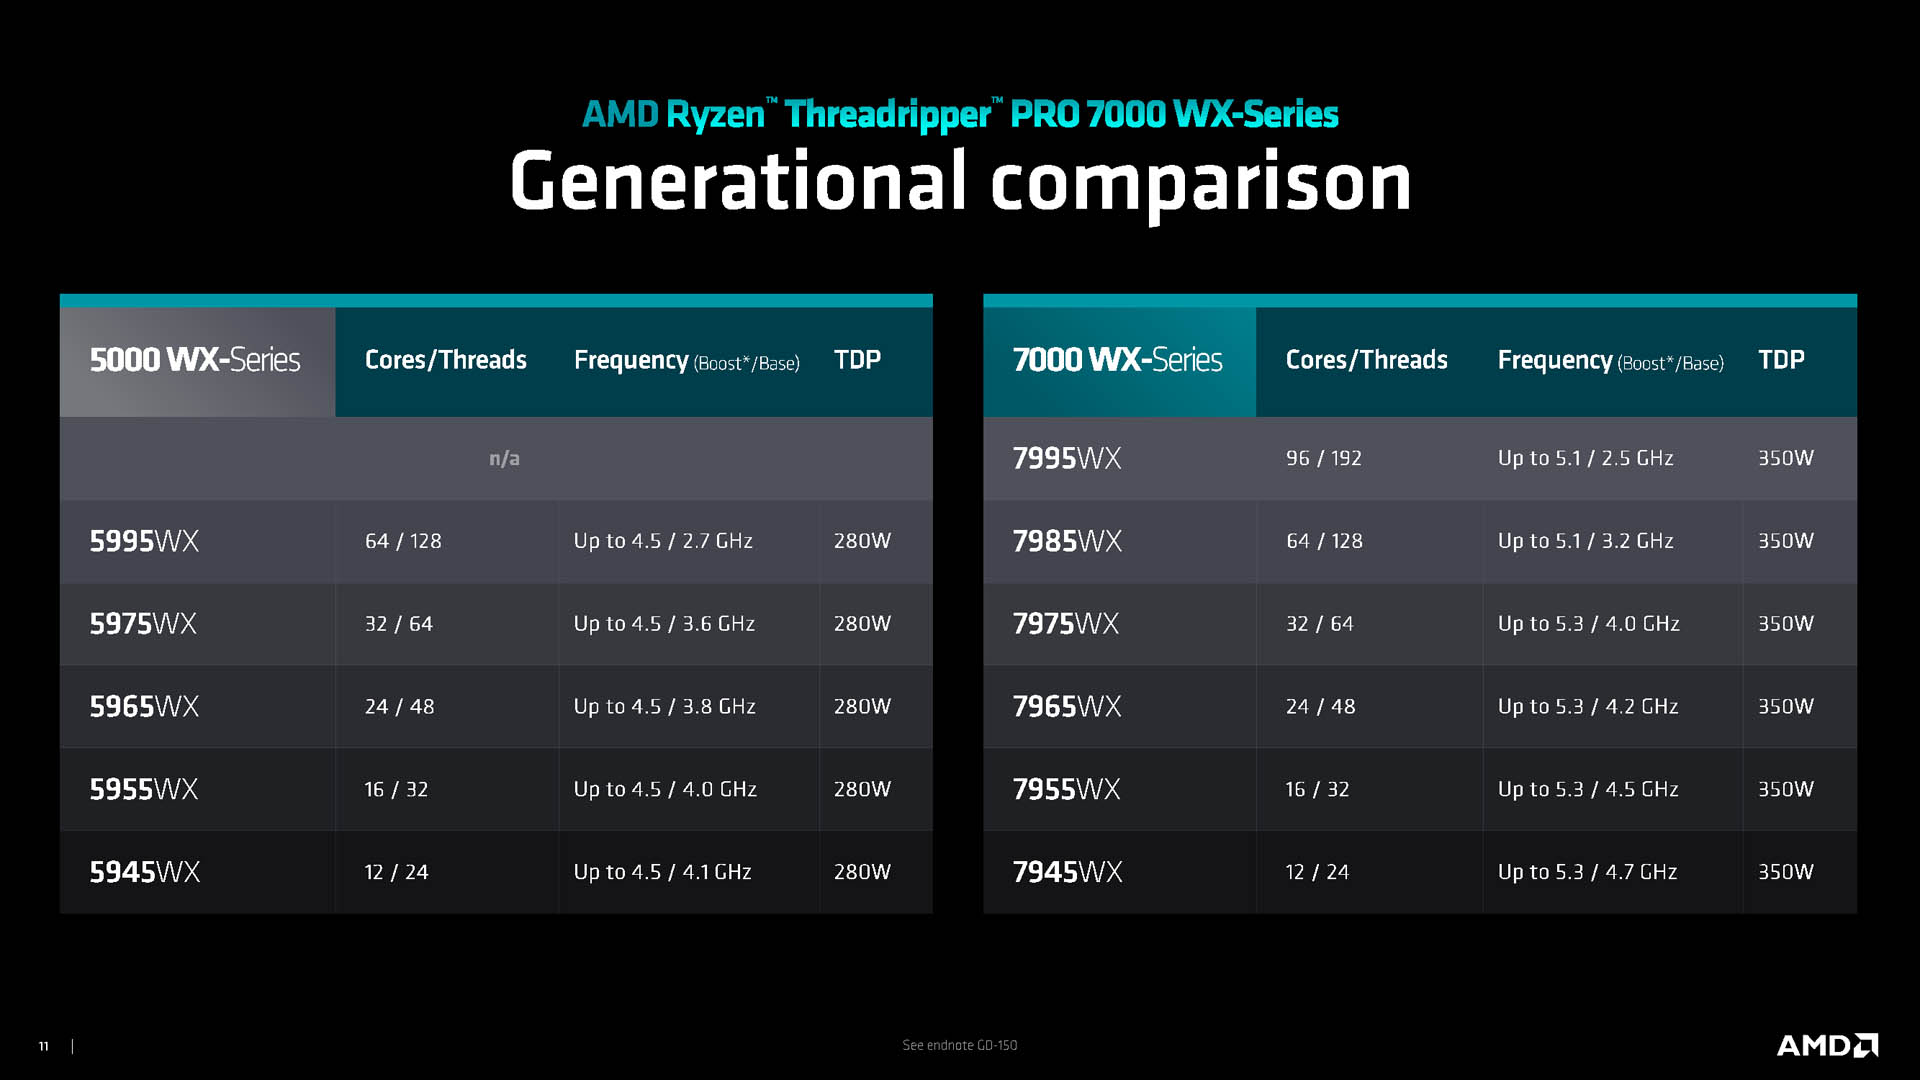 Threadripper Pro 7000 WX-Series